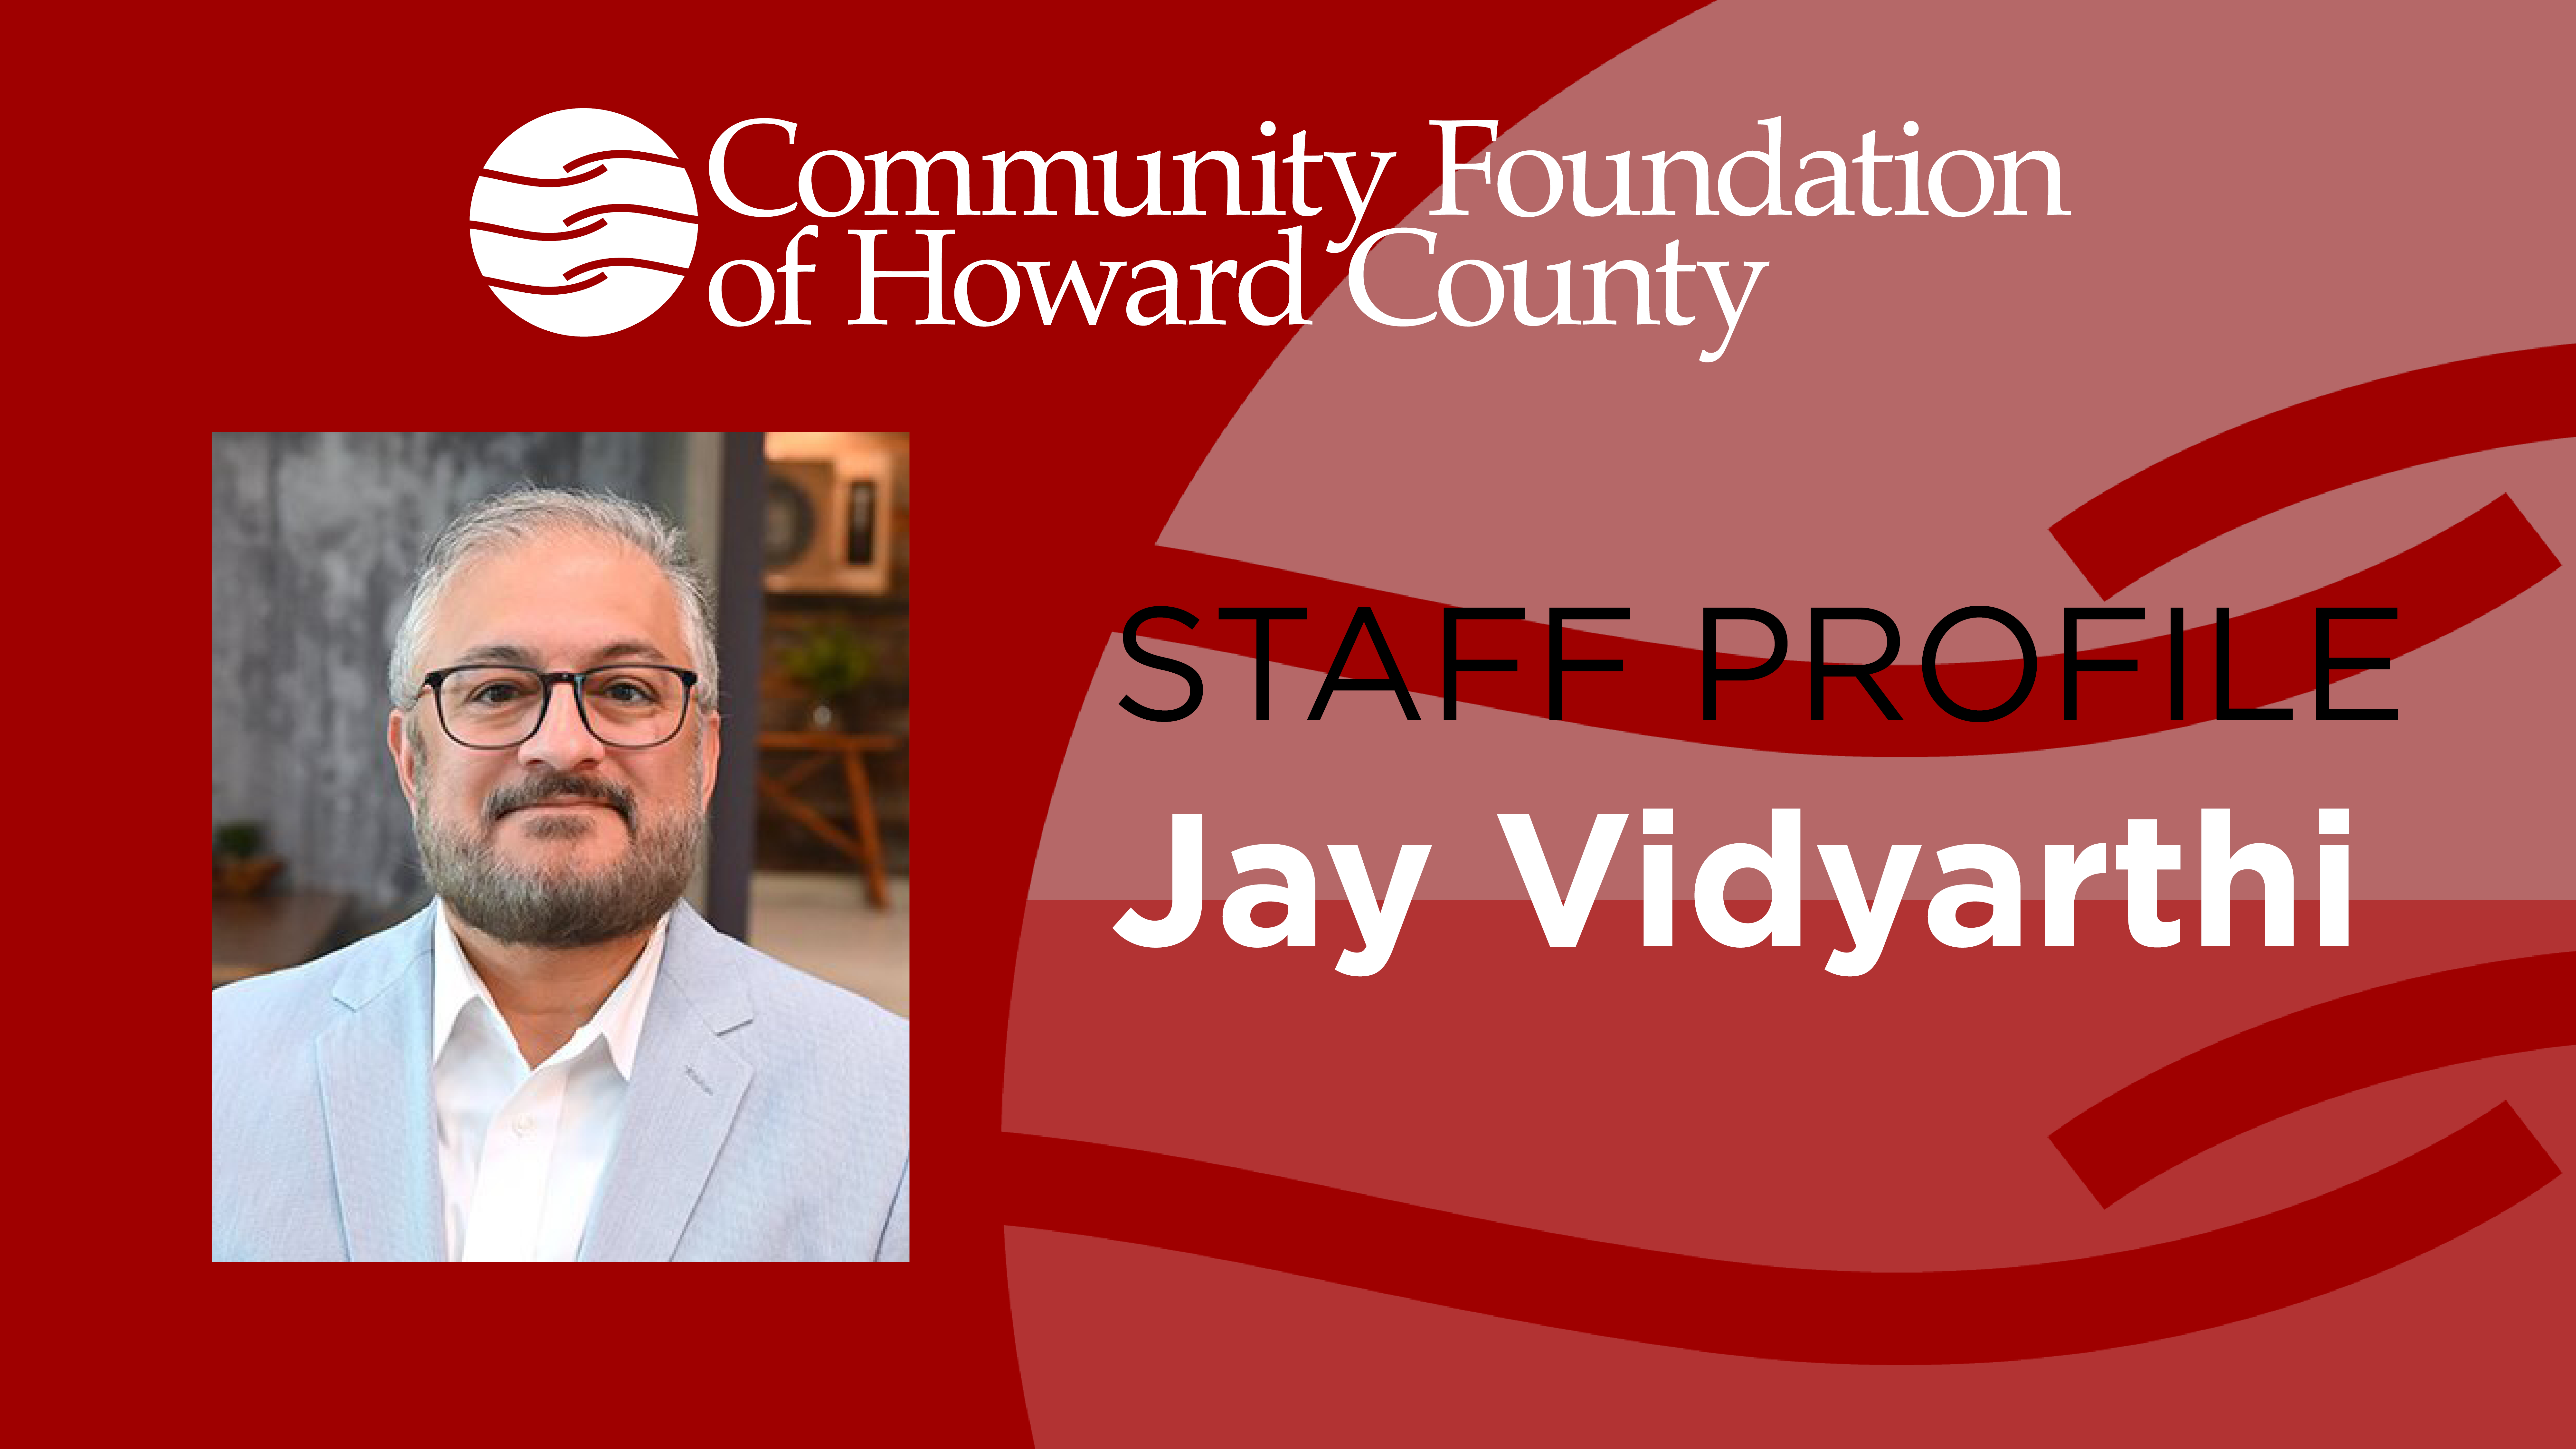 Staff Profile: Jay Vidyarthi